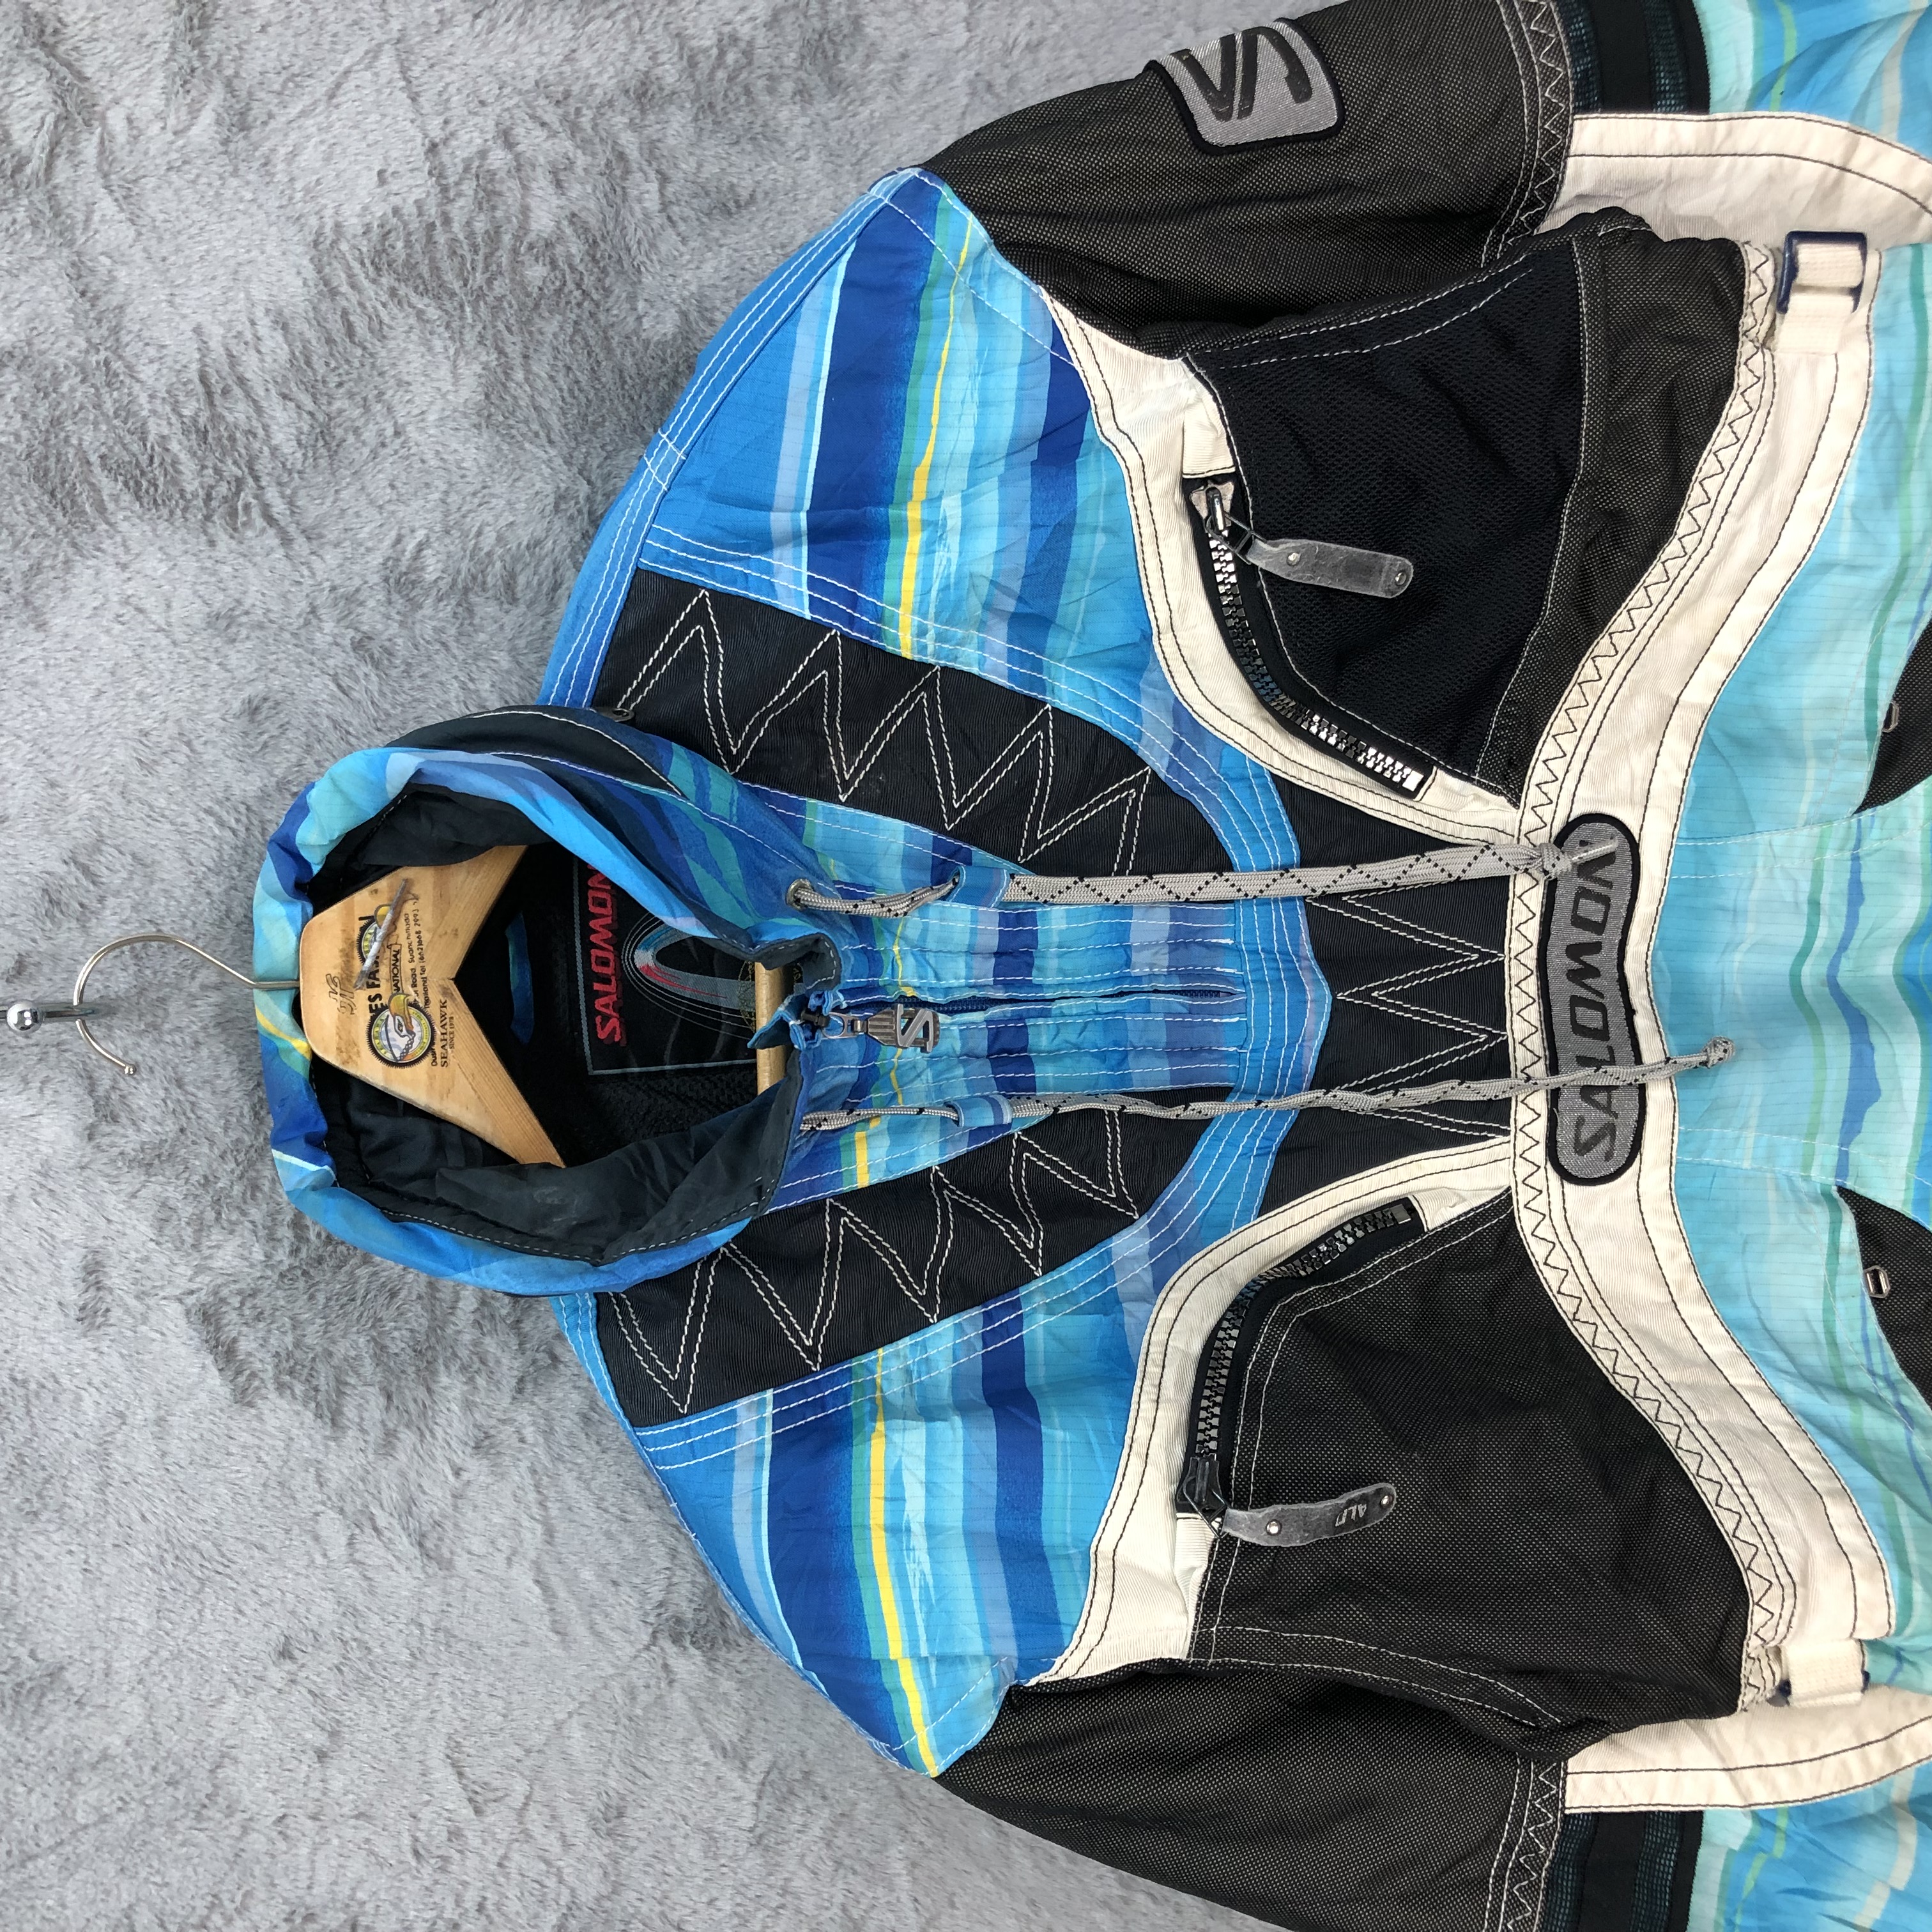 Salomon Optimal Movement Aqua Blue Ski Jacket #4748-167 - 2